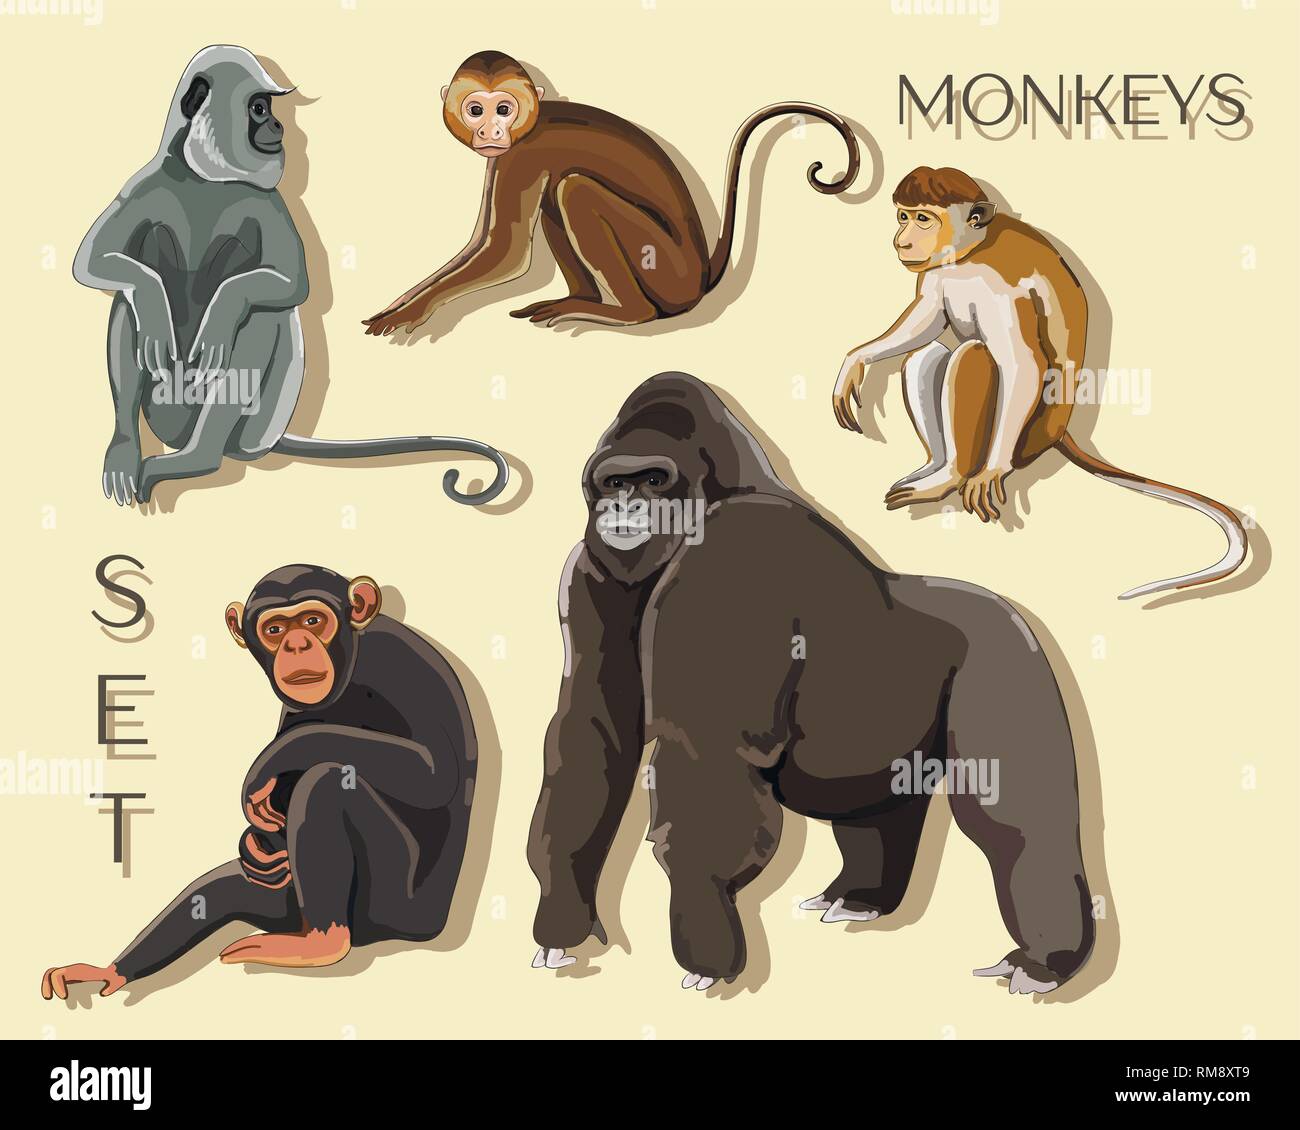 Monkey type